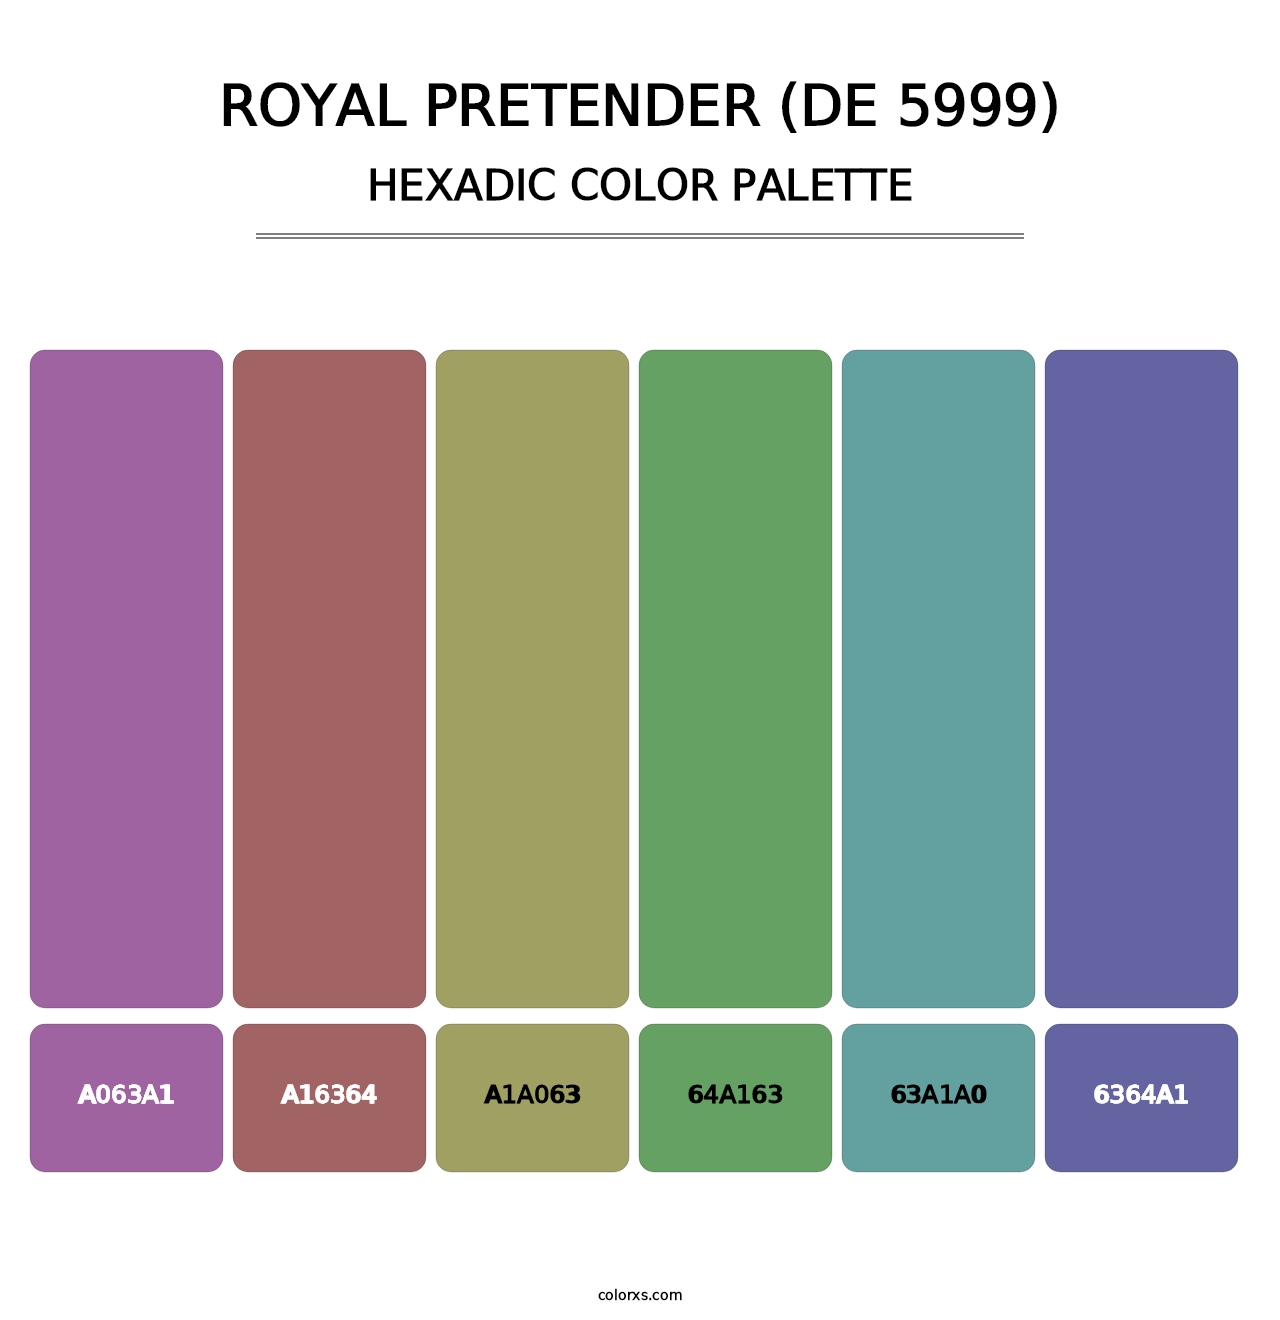 Royal Pretender (DE 5999) - Hexadic Color Palette